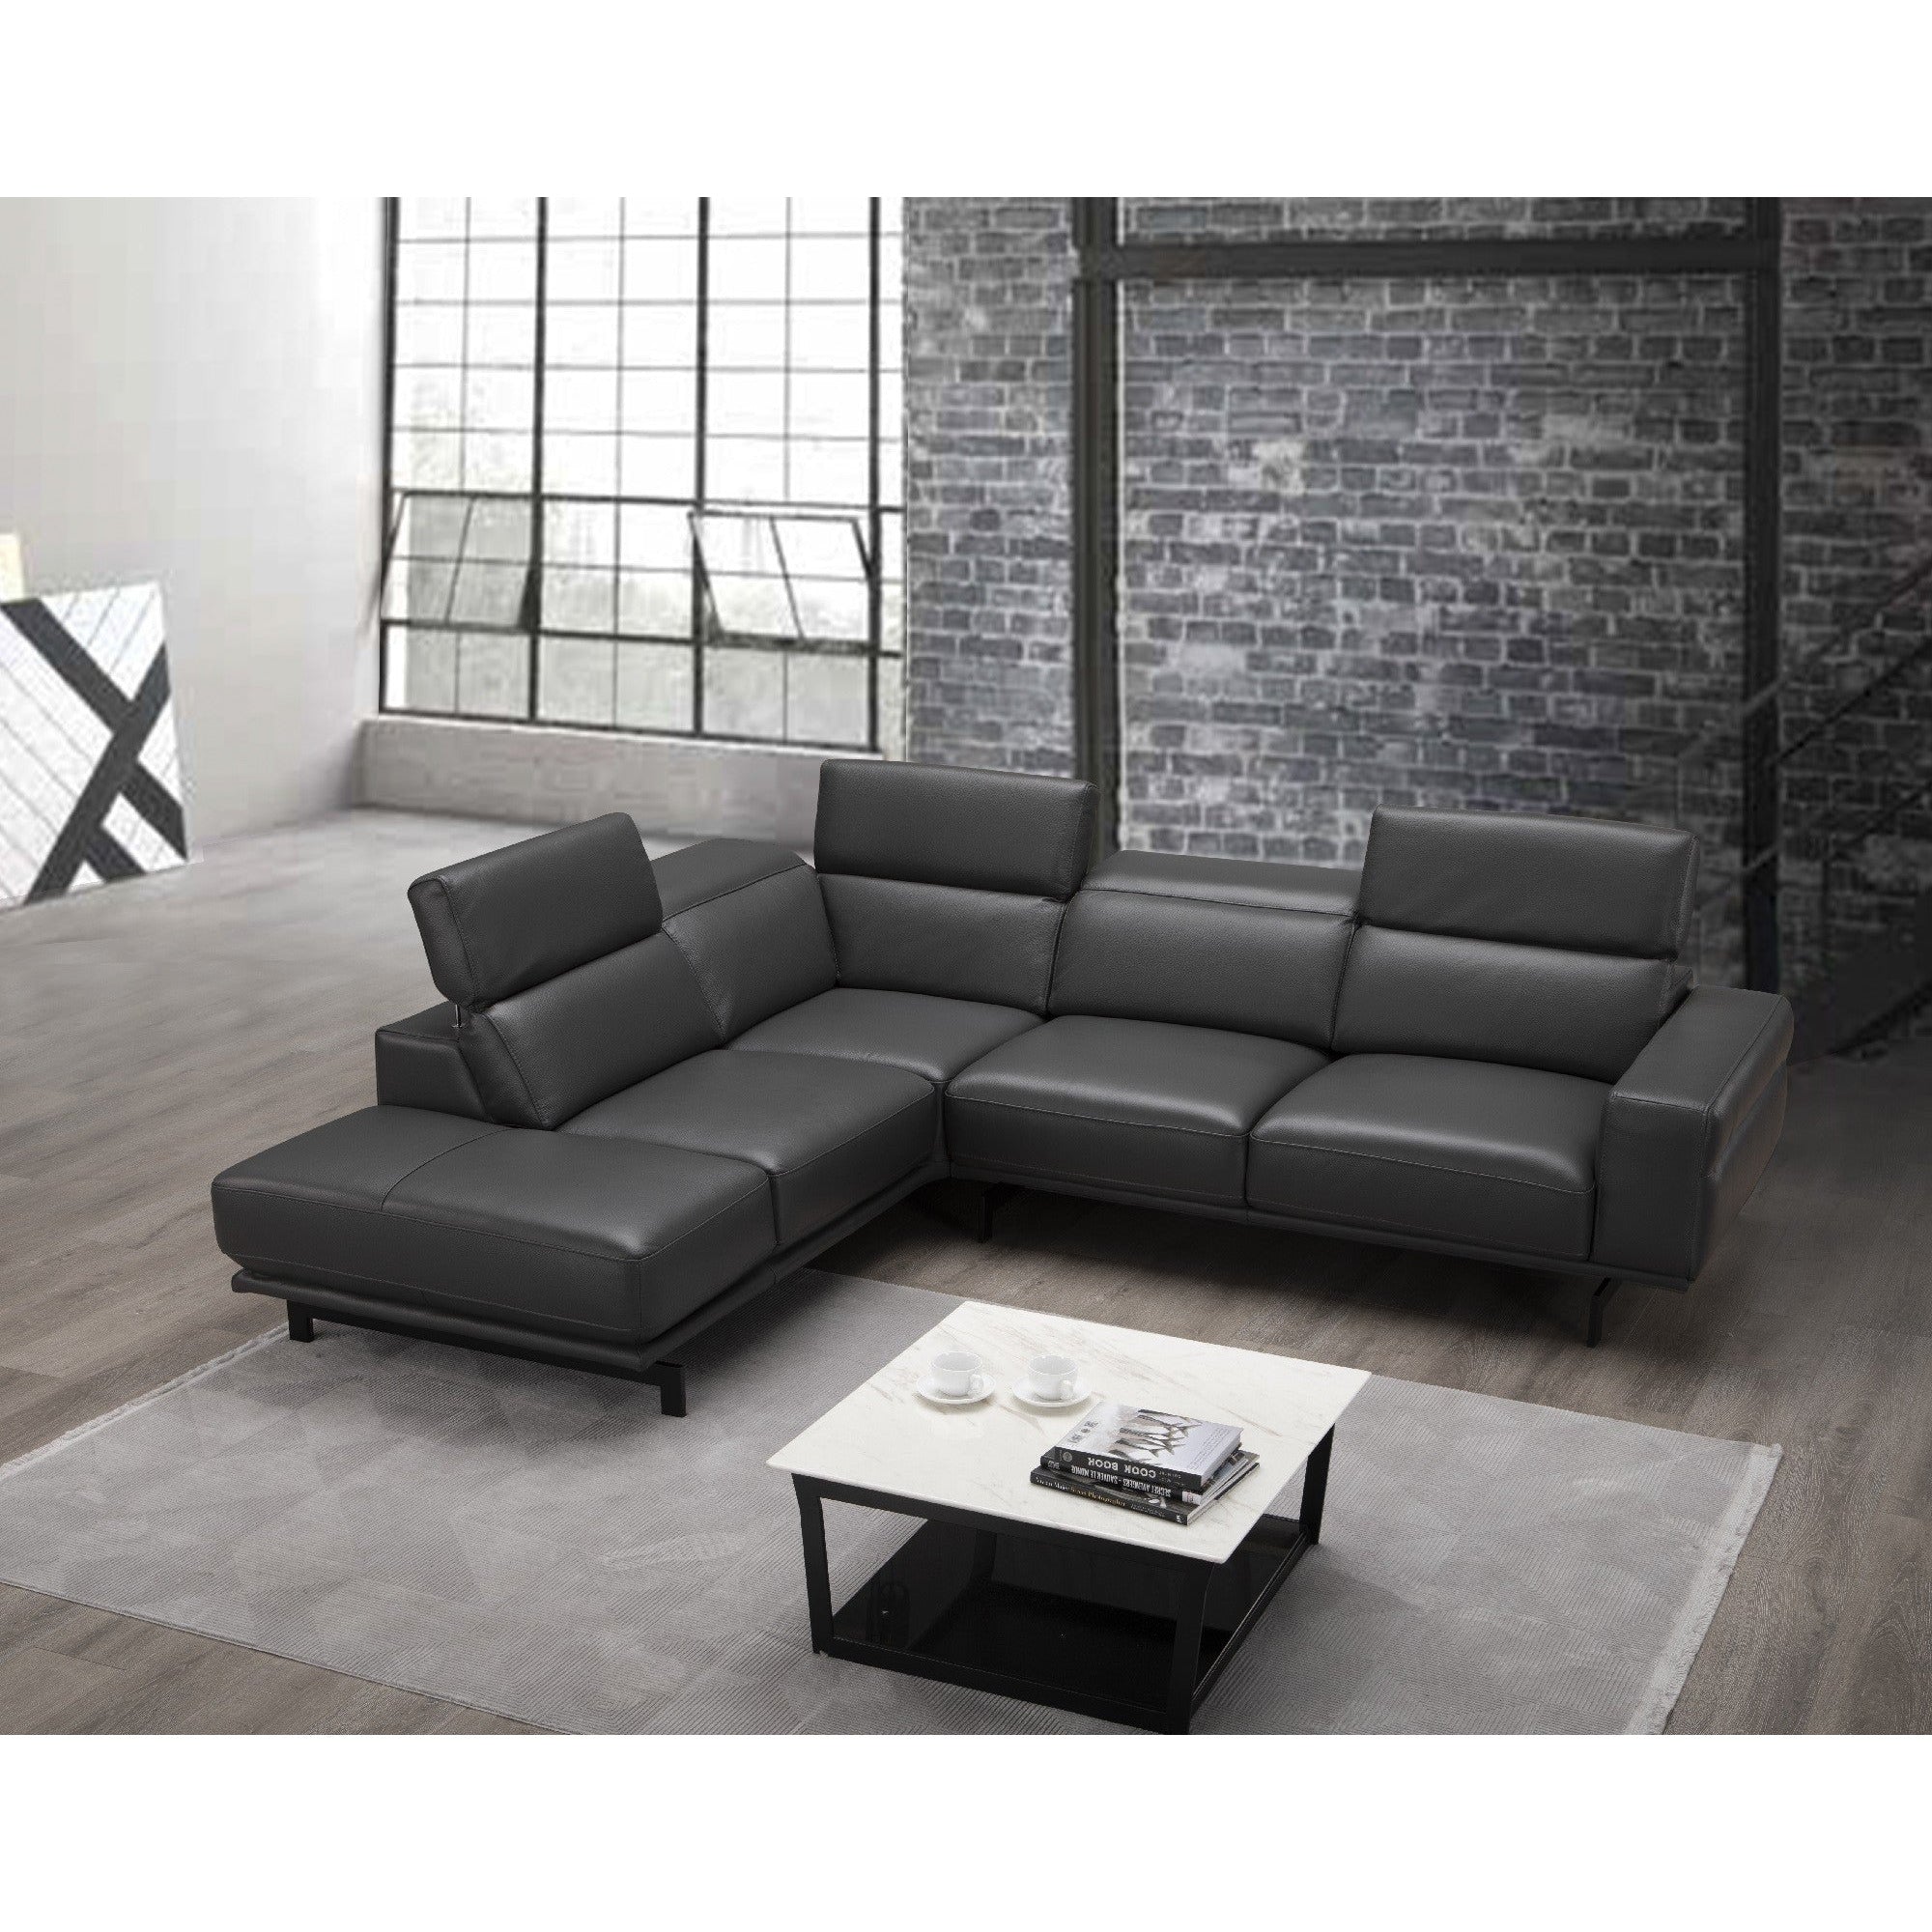 J&M Furniture Davenport Leather Sectional in Slate (SKU18875)